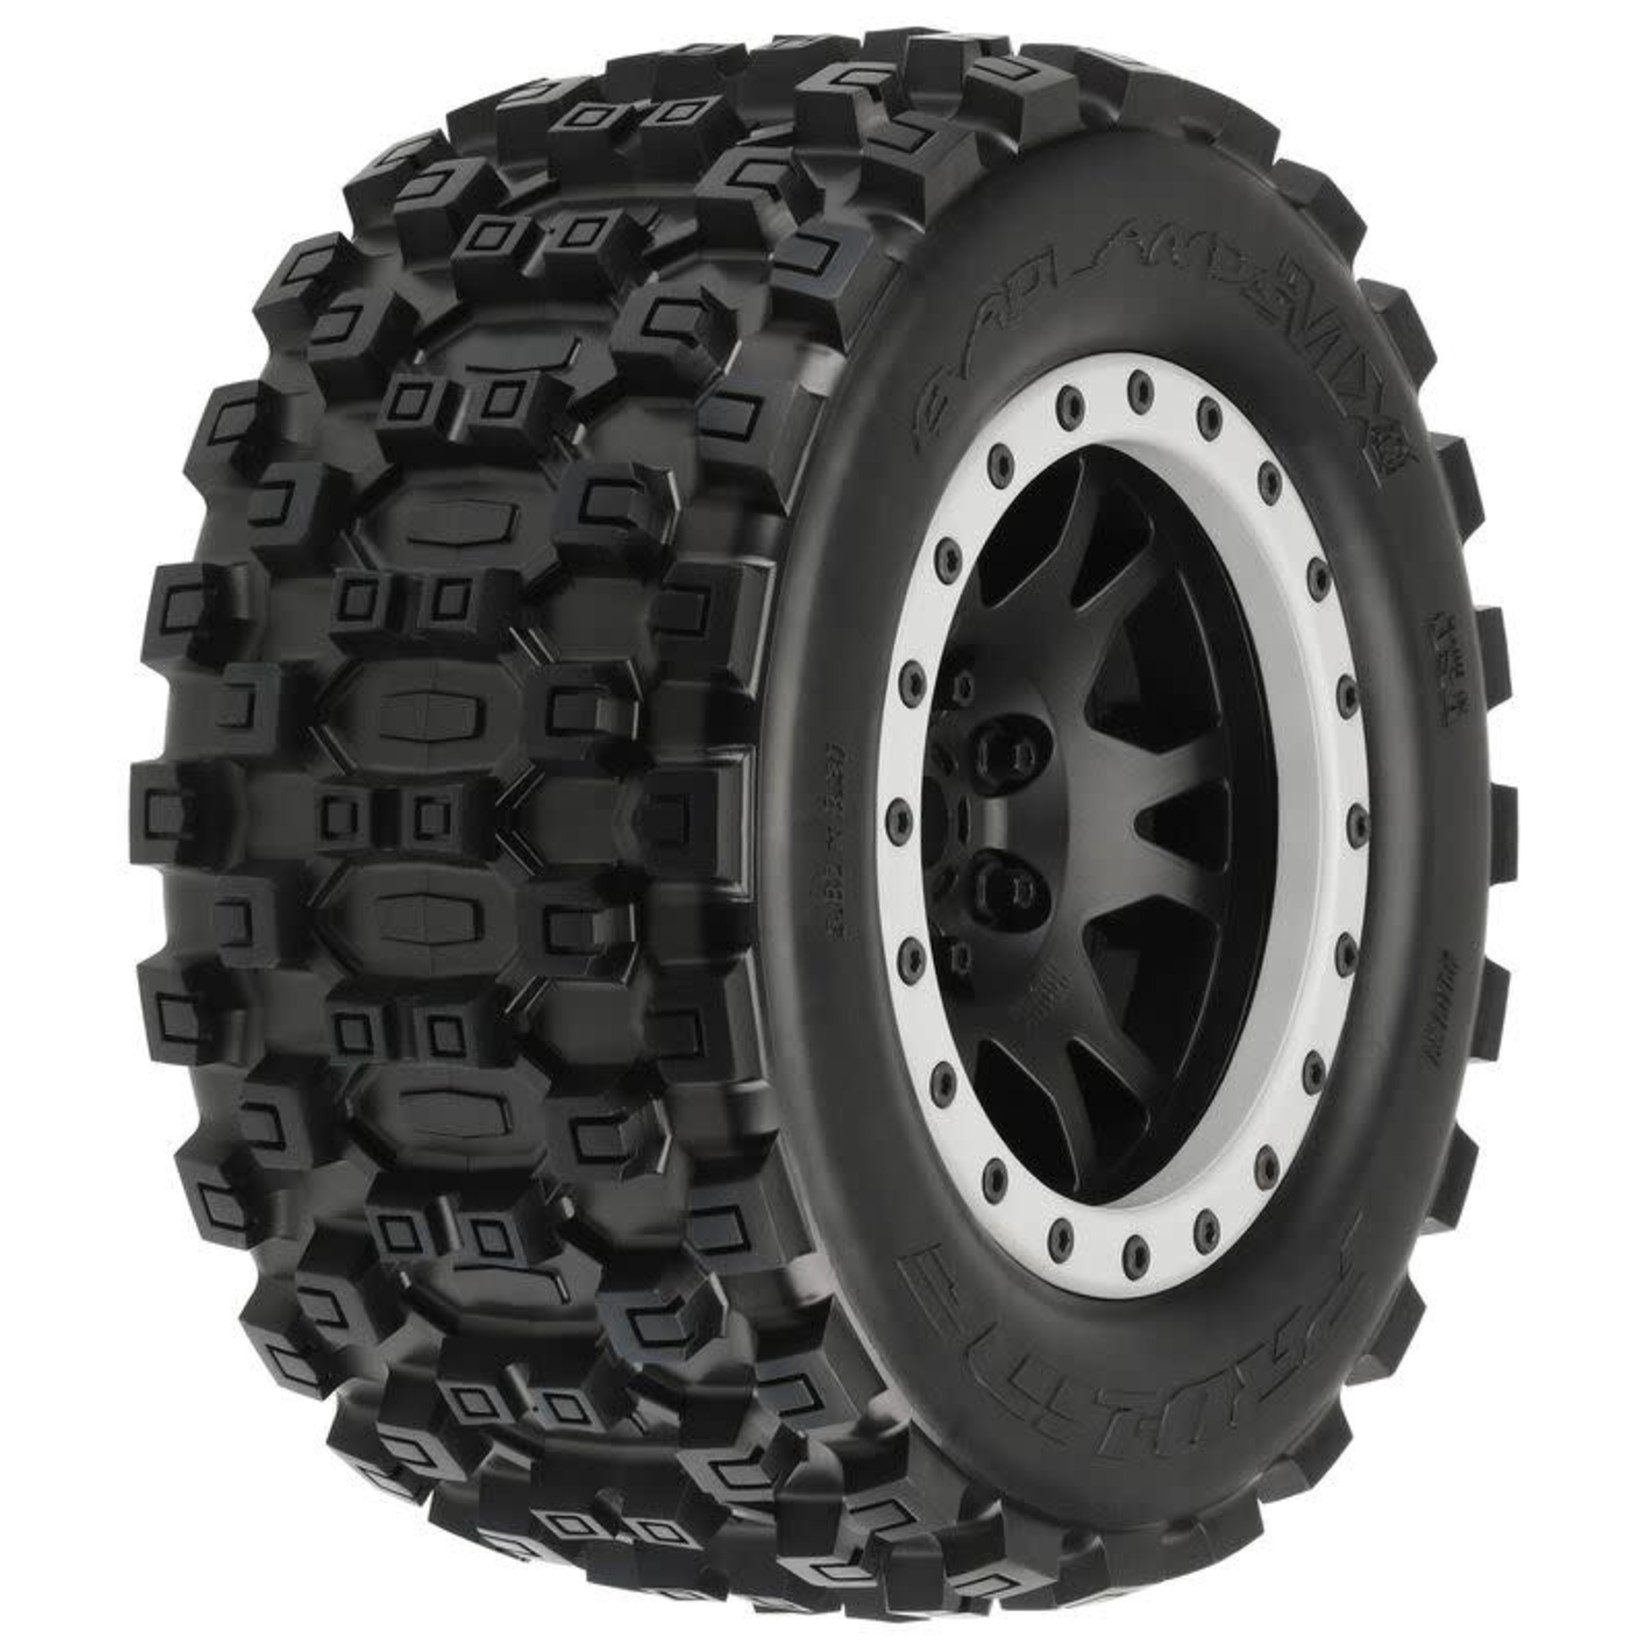 Pro-Line Pro-Line X-Maxx Badlands MX43 Pro-Loc Pre-Mounted All Terrain Tires (MX43) w/Impulse Pro-Loc Wheels (Black) (2) #10131-13